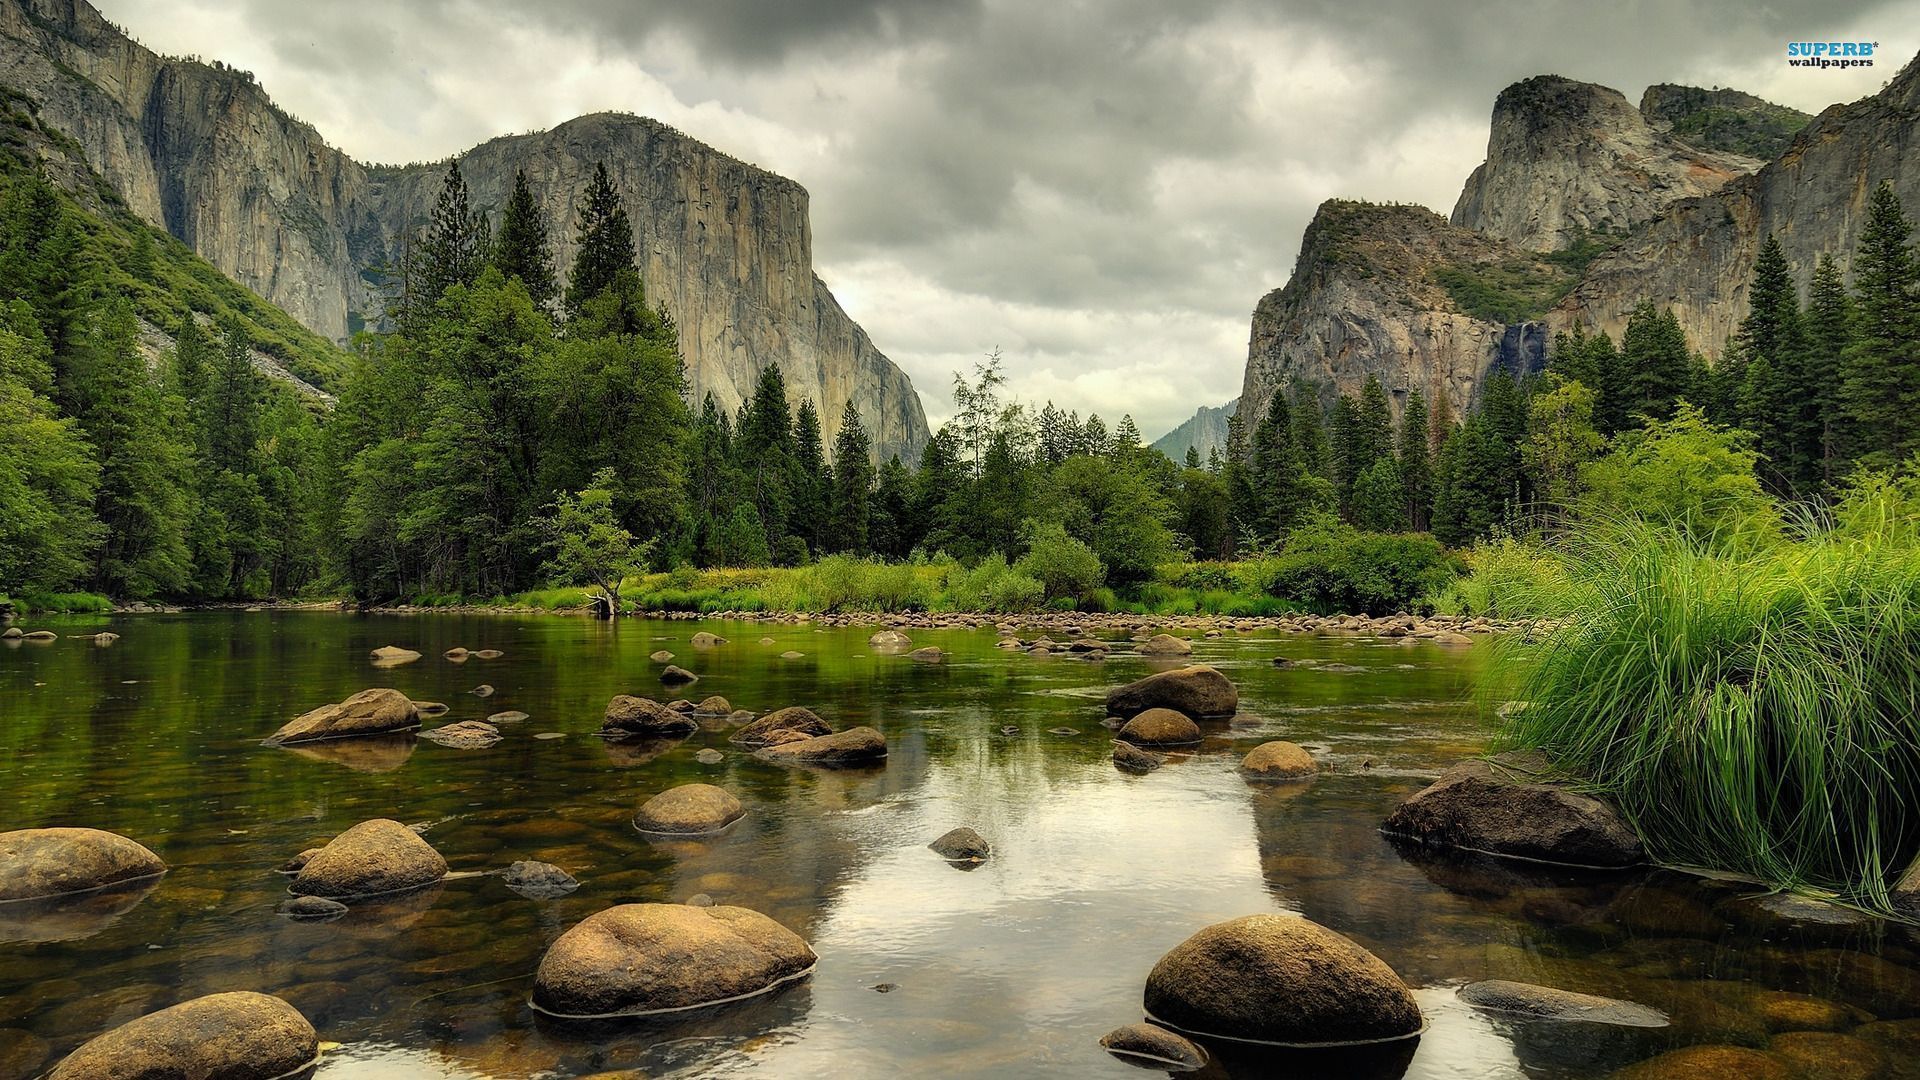 Yosemite National Park | Information & Facts | Tiverton Foundation